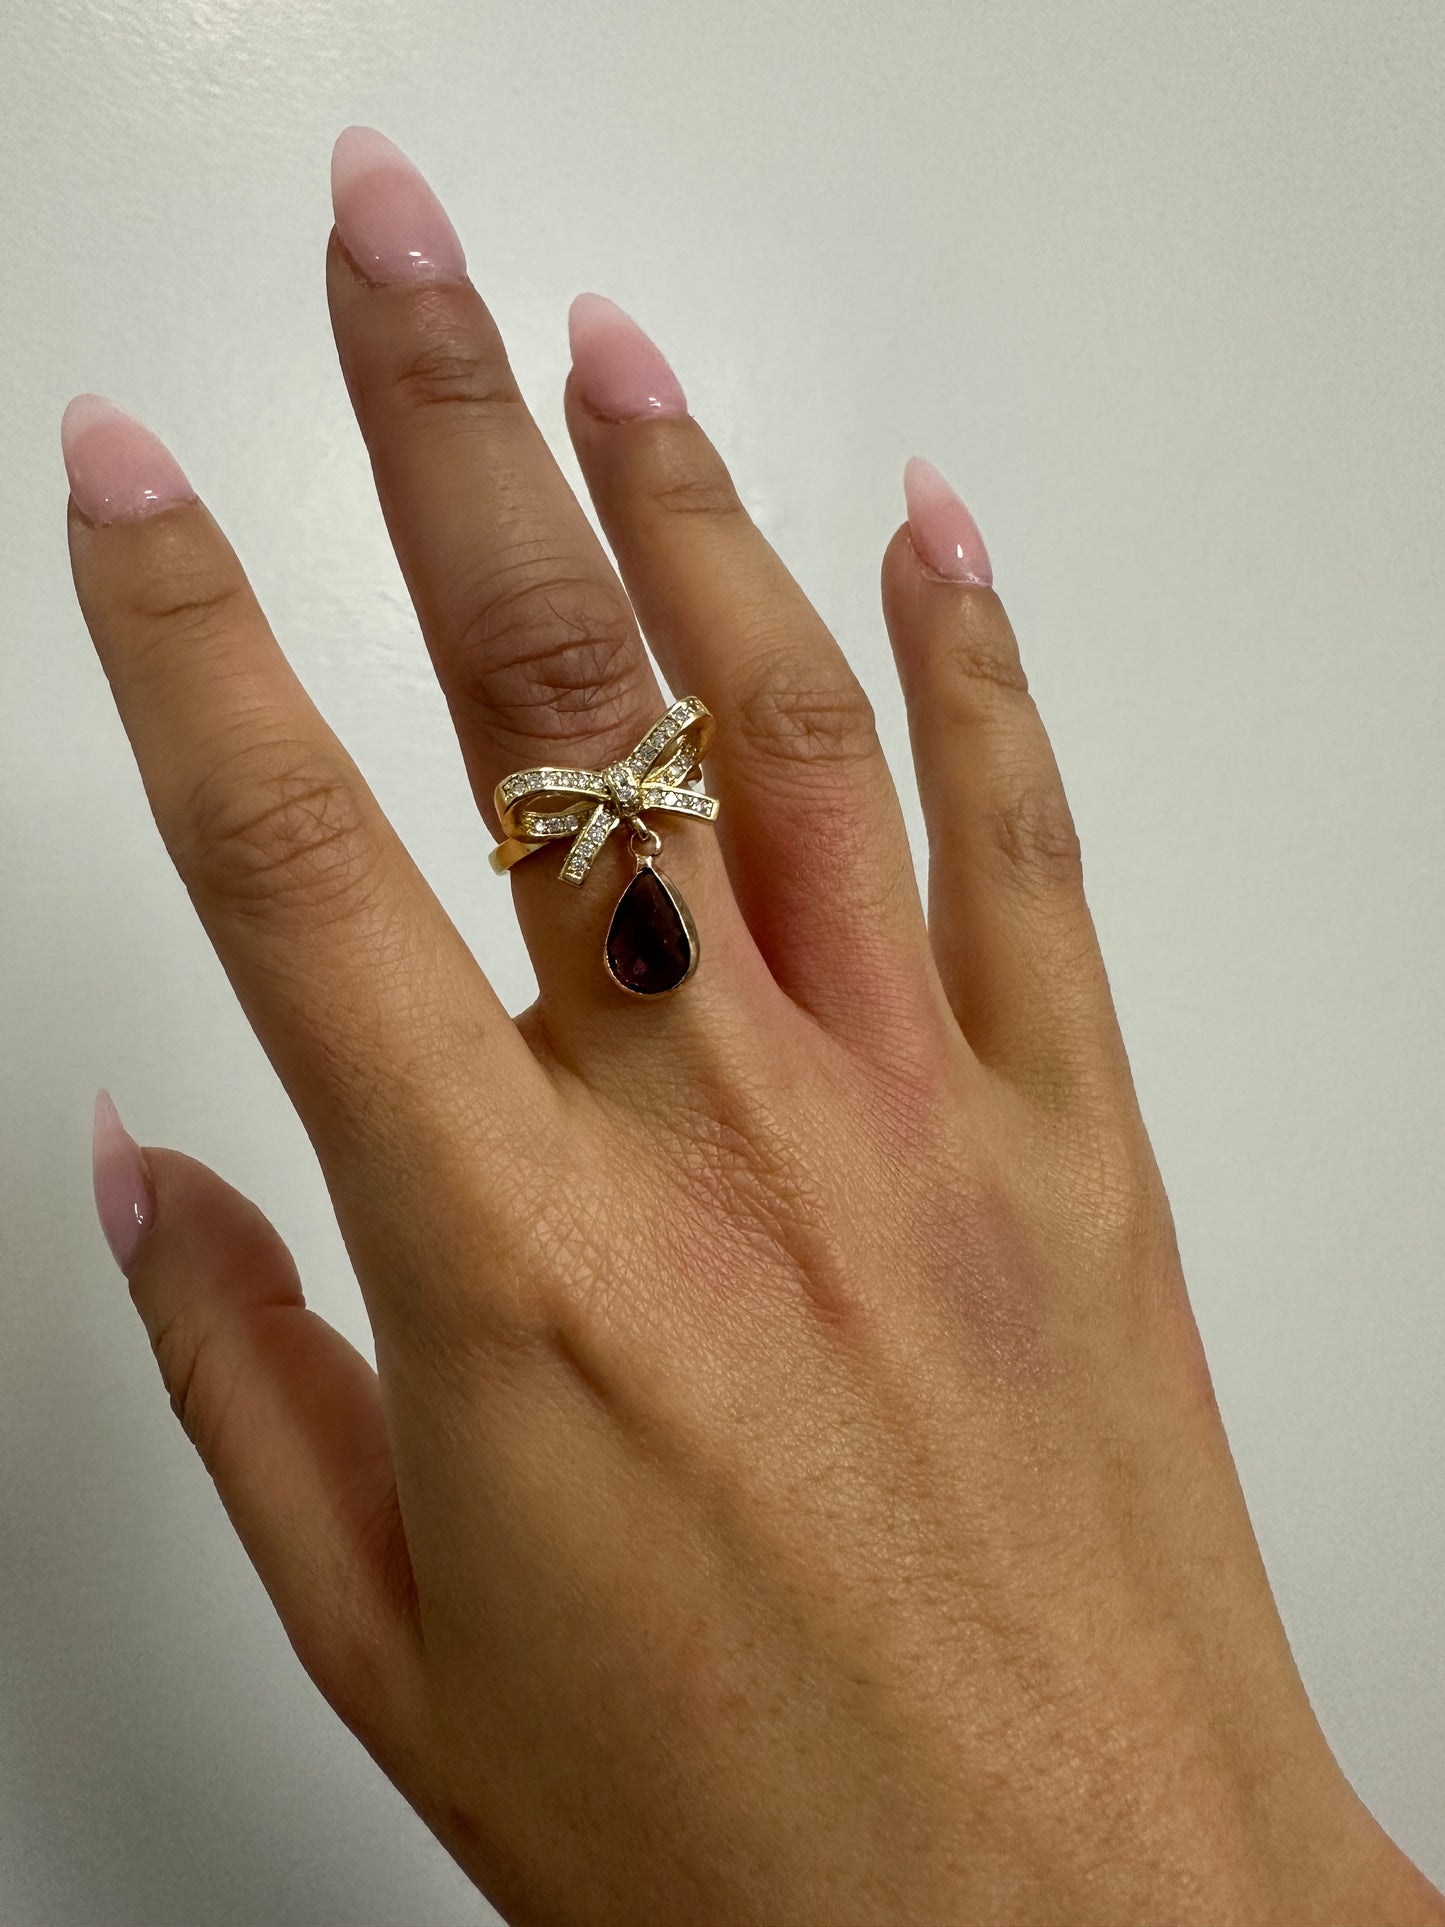 Theodora Birthstone Charm Ring